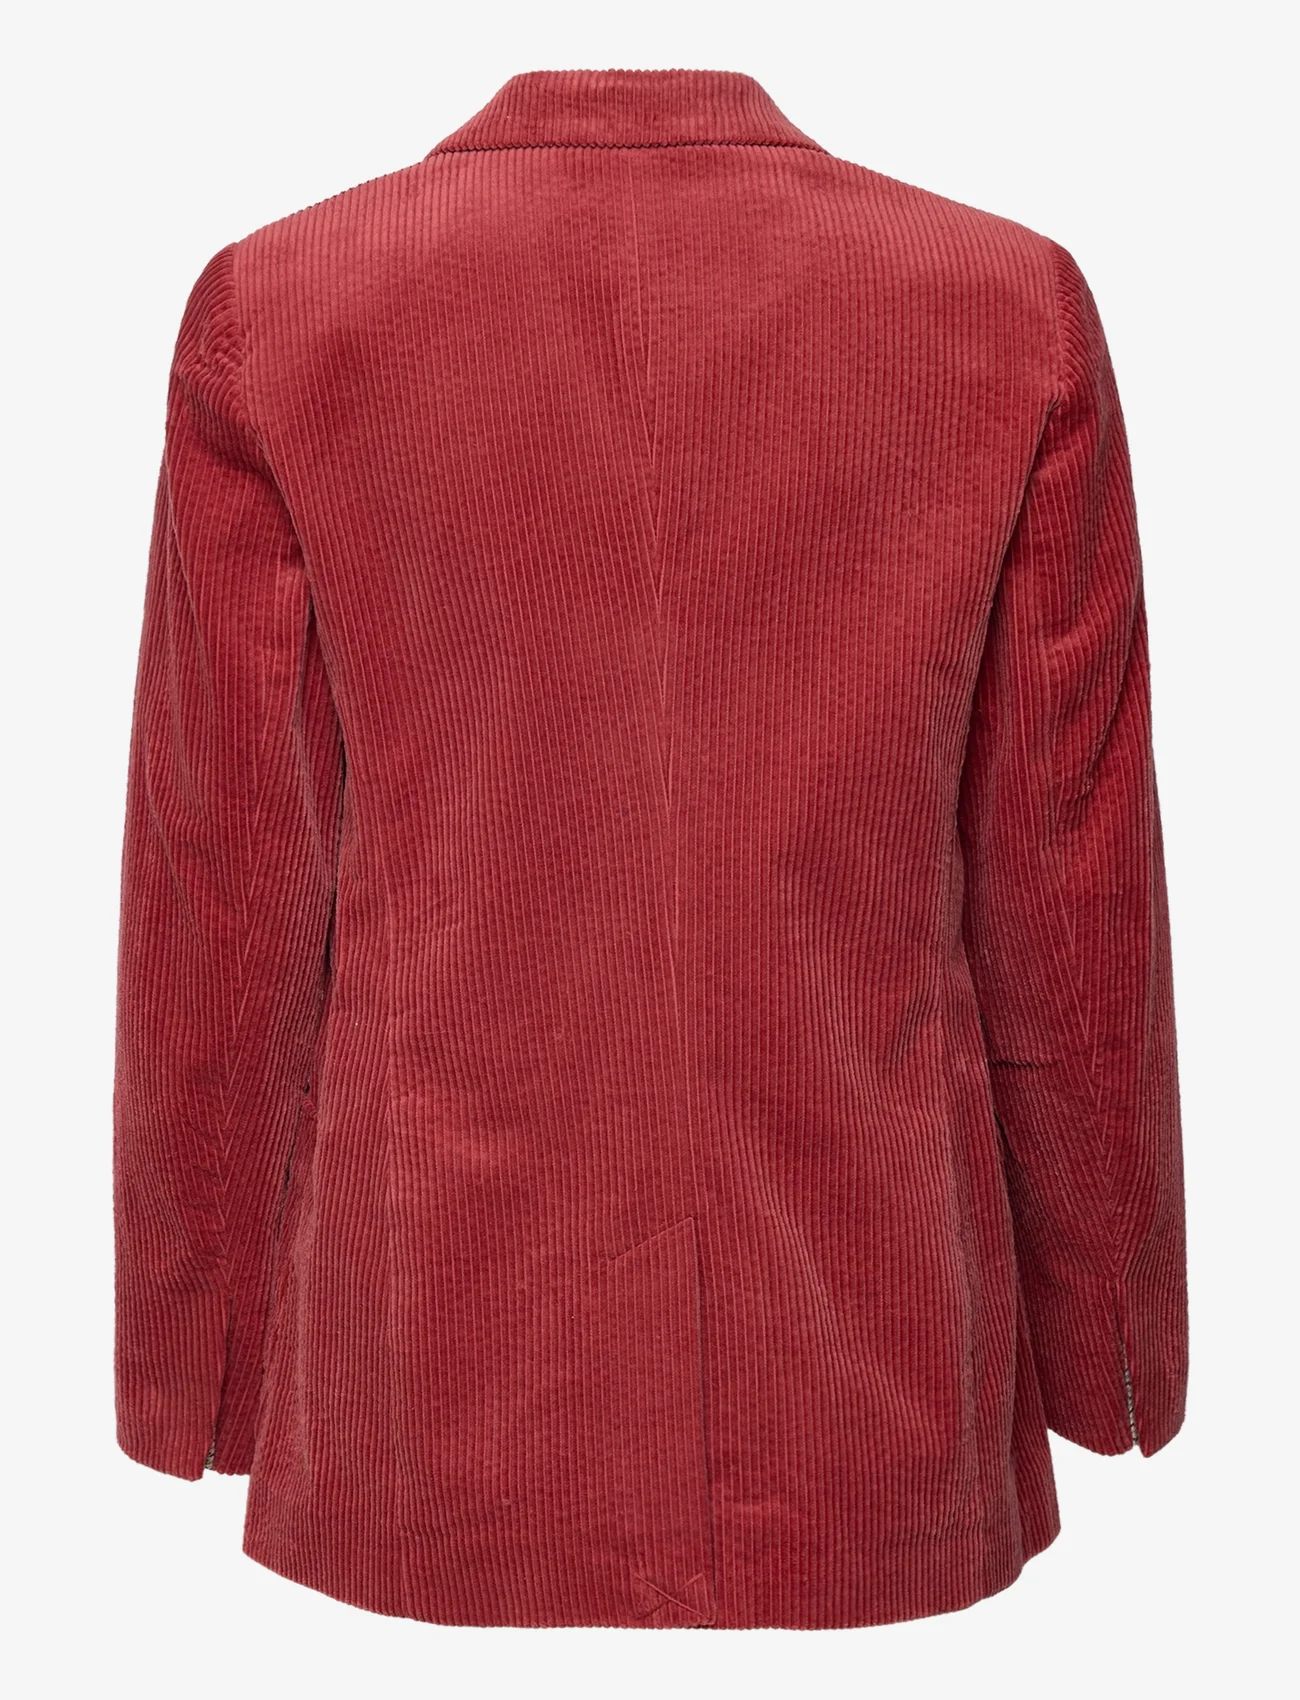 Esprit Casual - Corduroy blazer, 100% cotton - festmode zu outlet-preisen - terracotta - 1